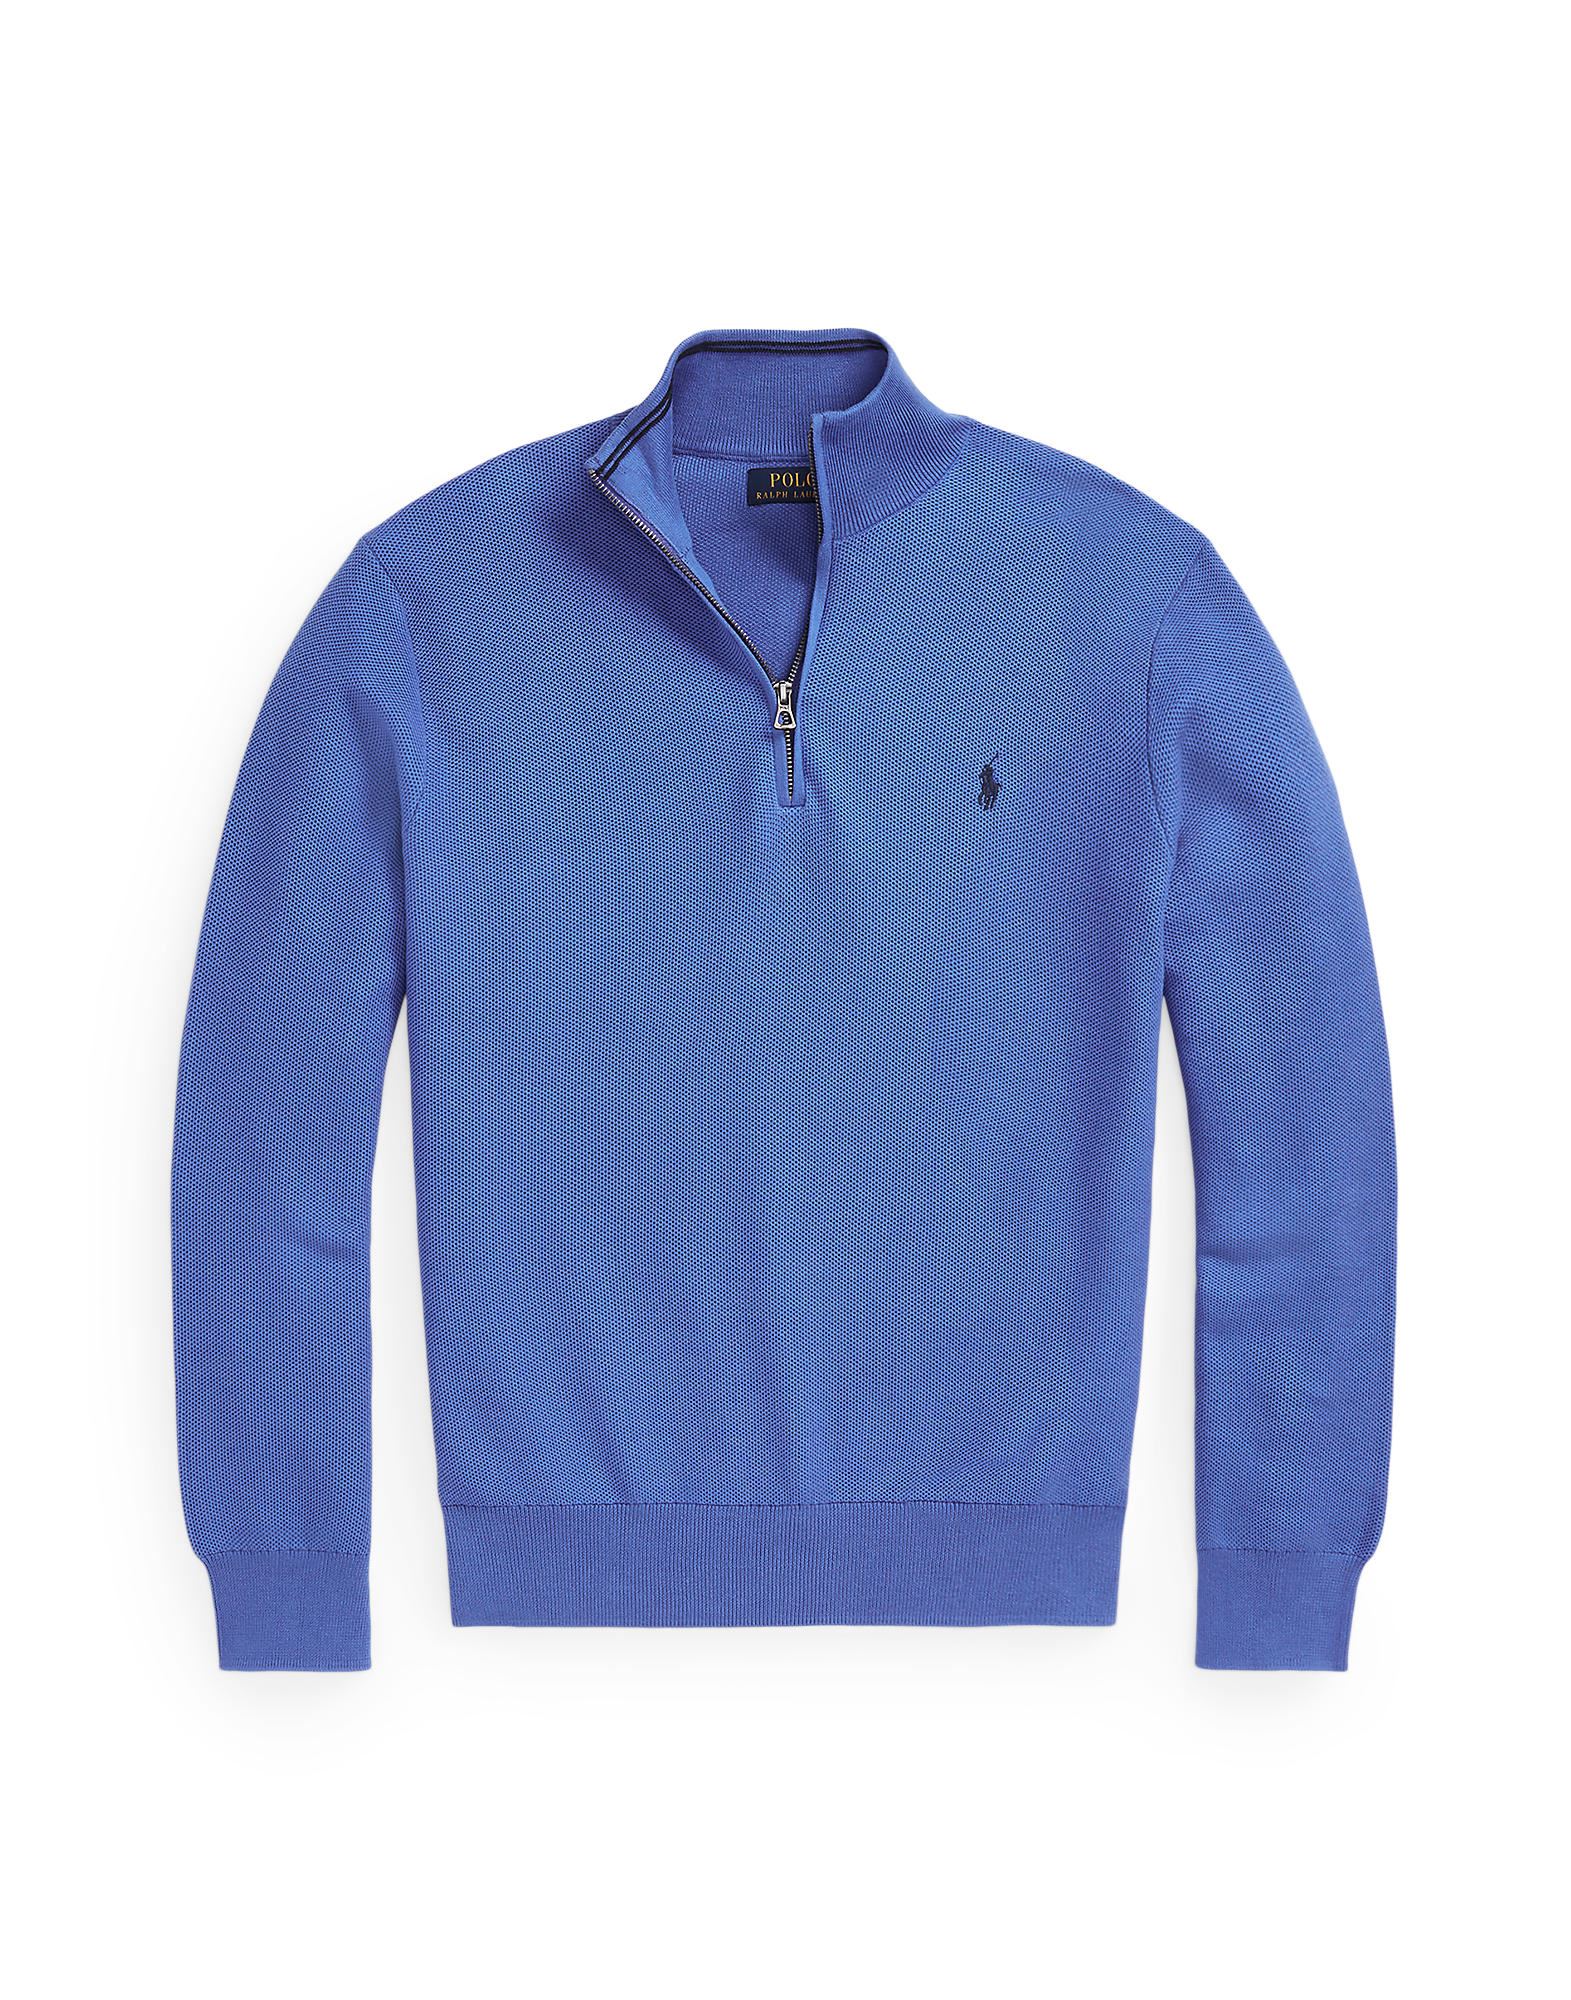 Polo Ralph Lauren Turtlenecks In Blue